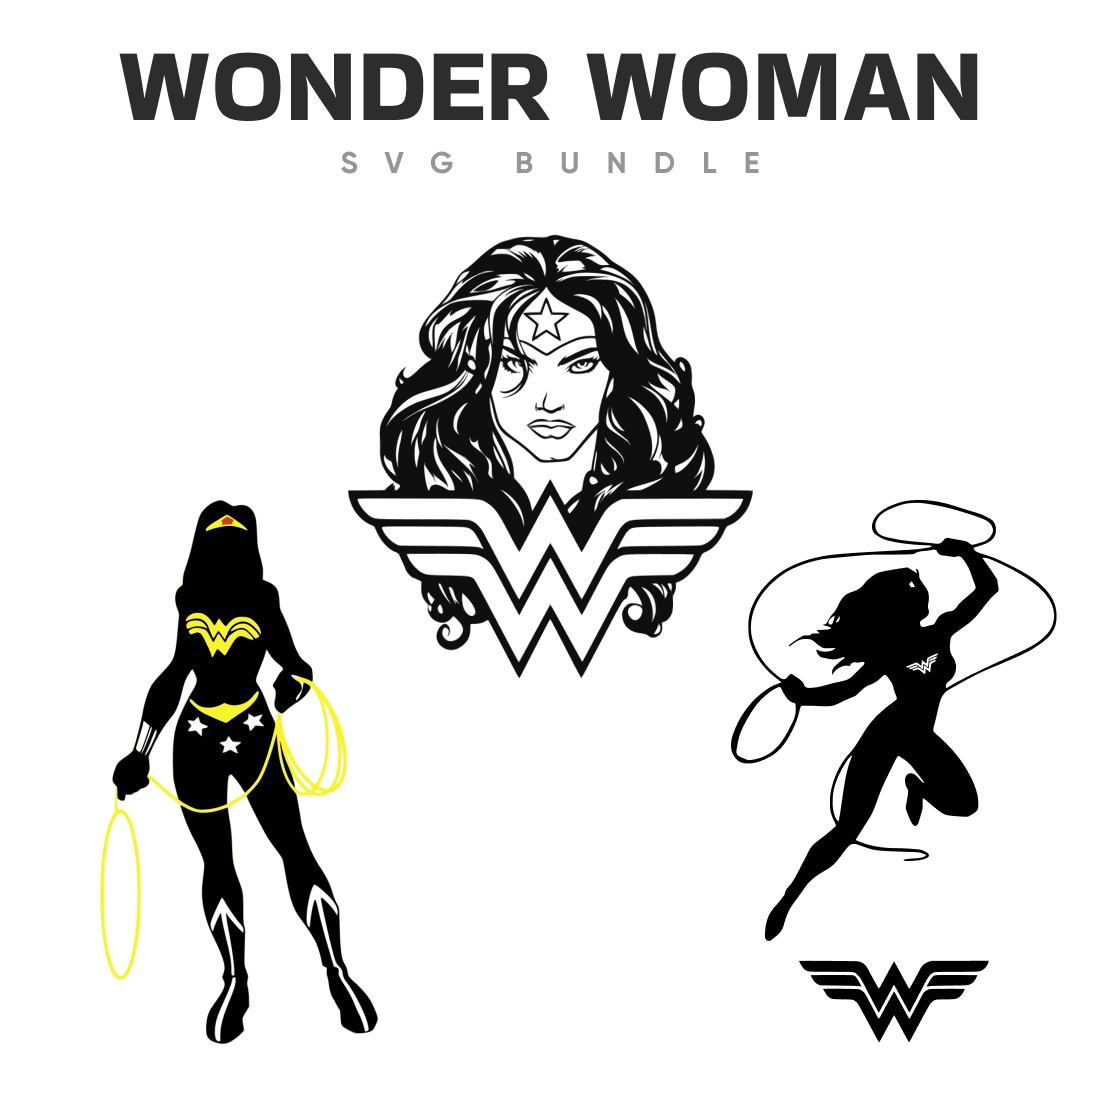 Wonder Woman SVG.